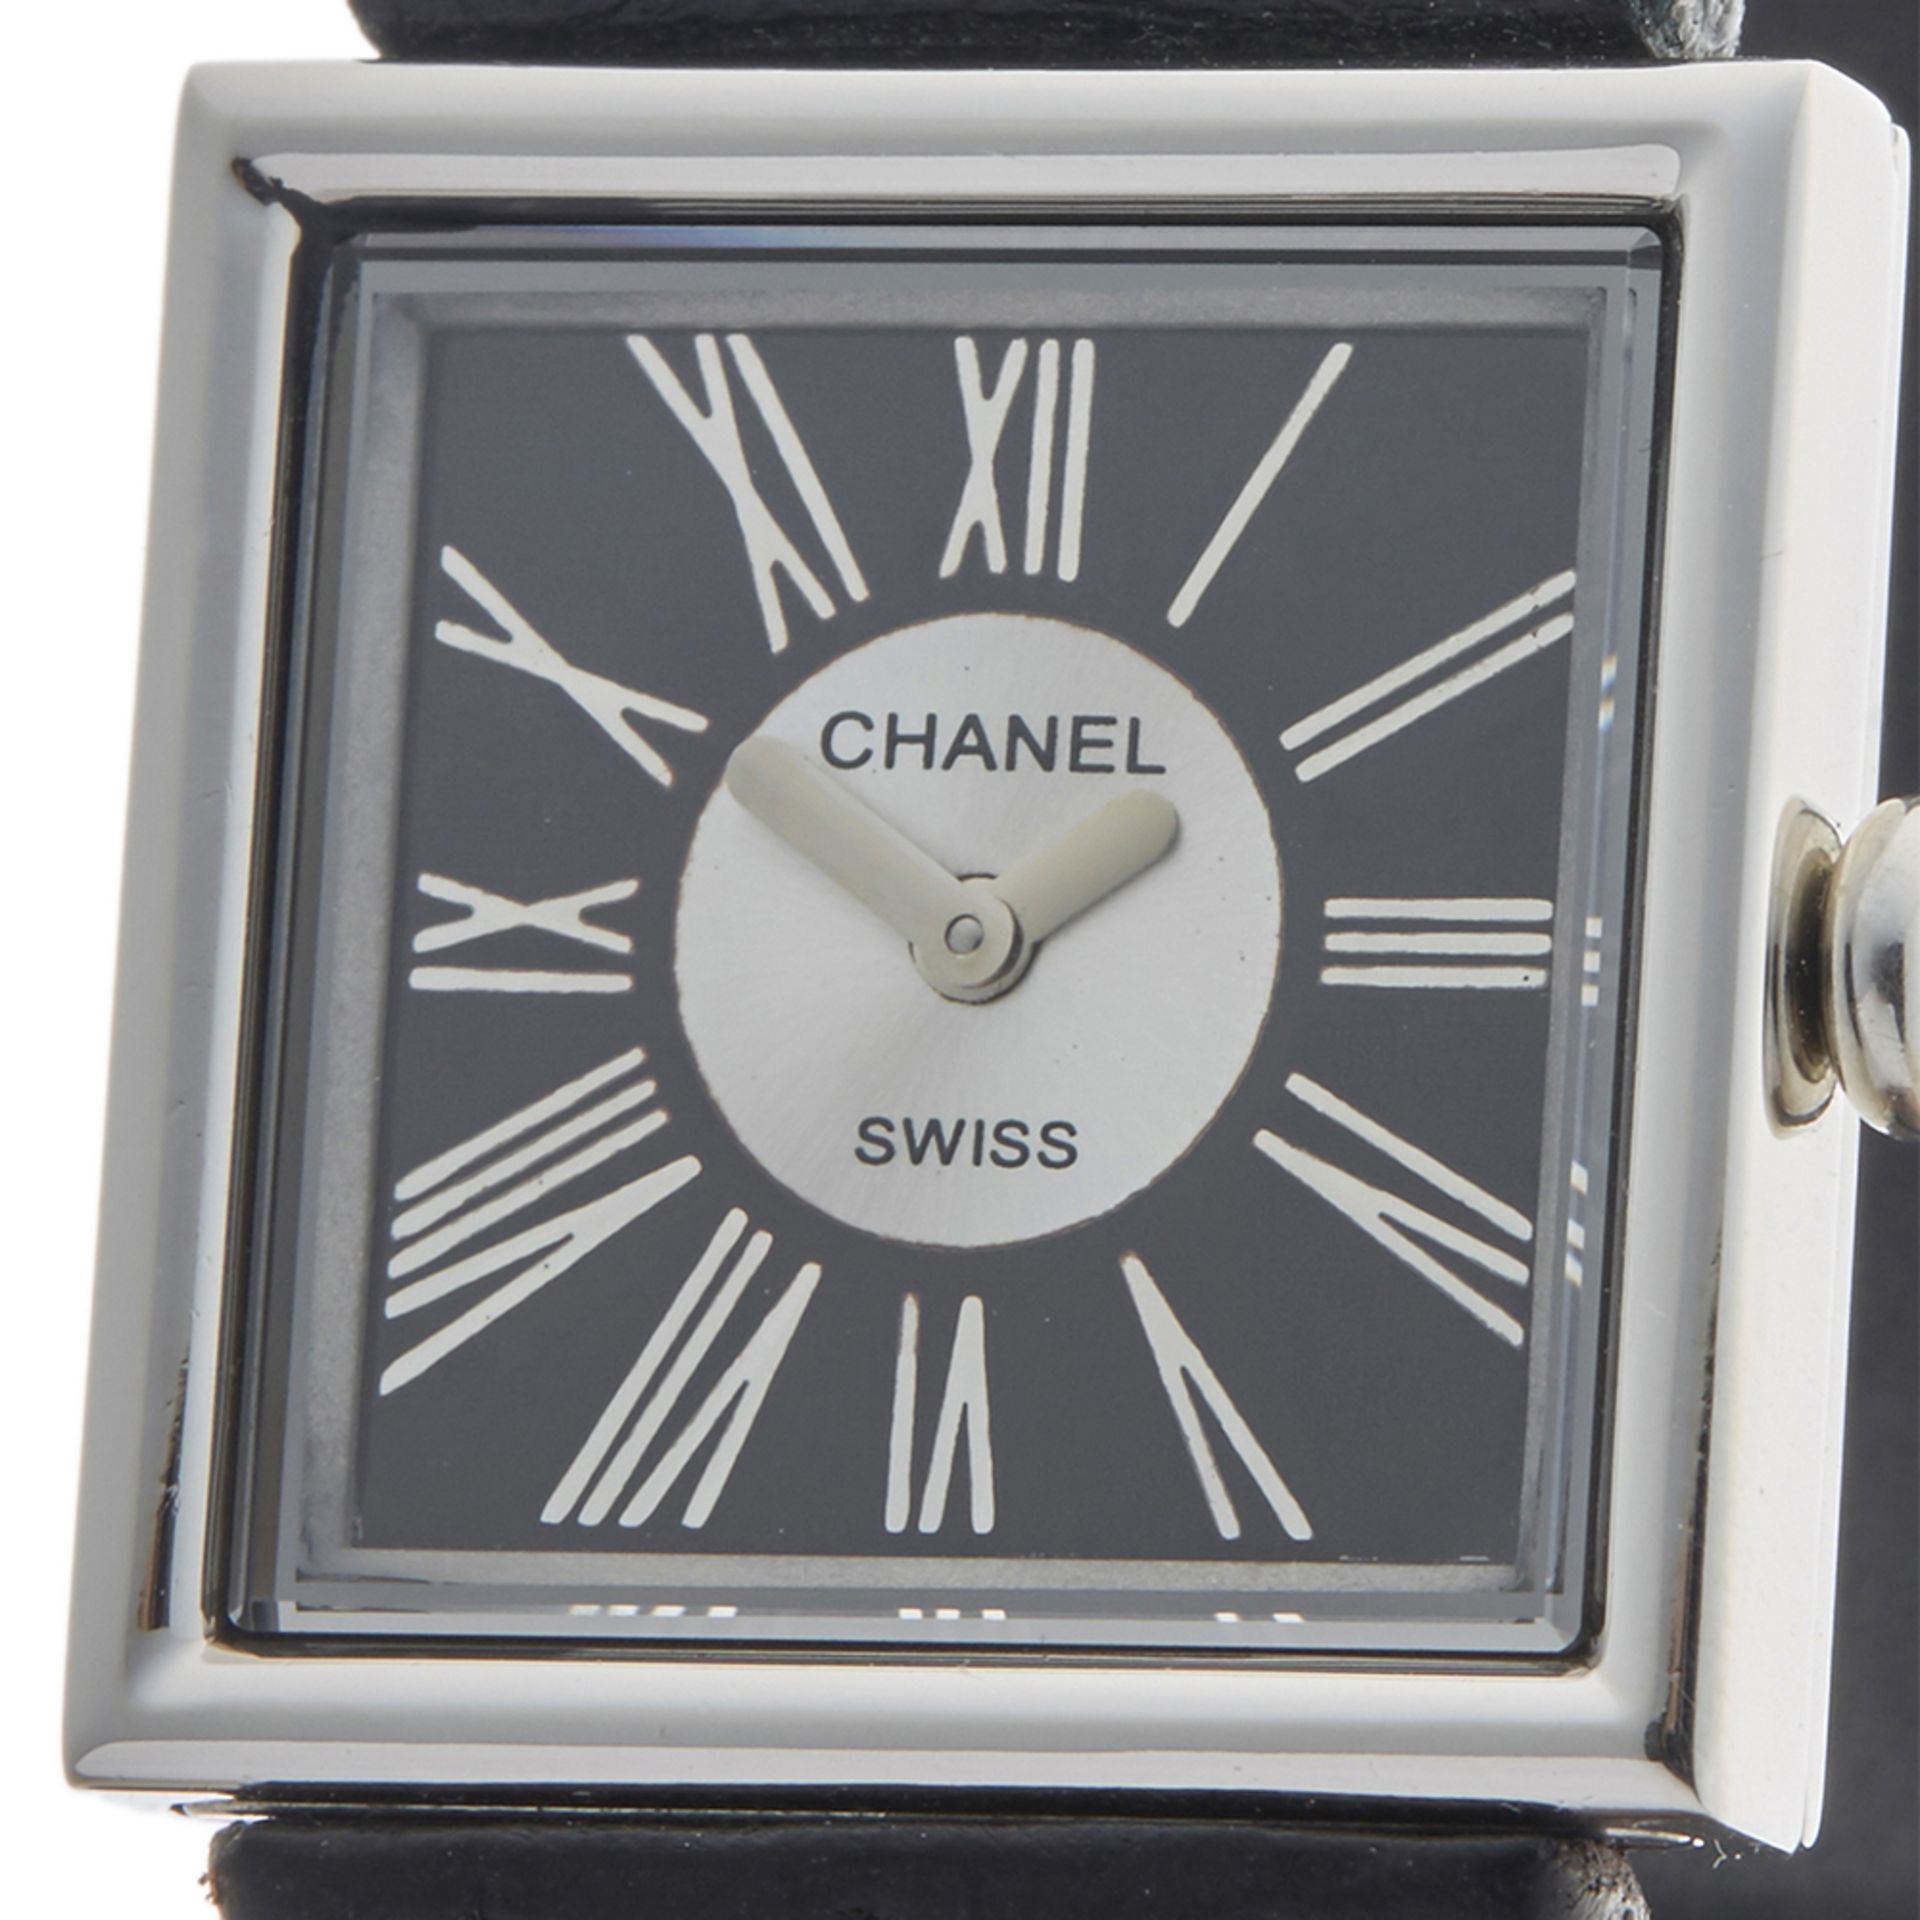 Chanel Mademoiselle 22mm Platinum - Image 3 of 9